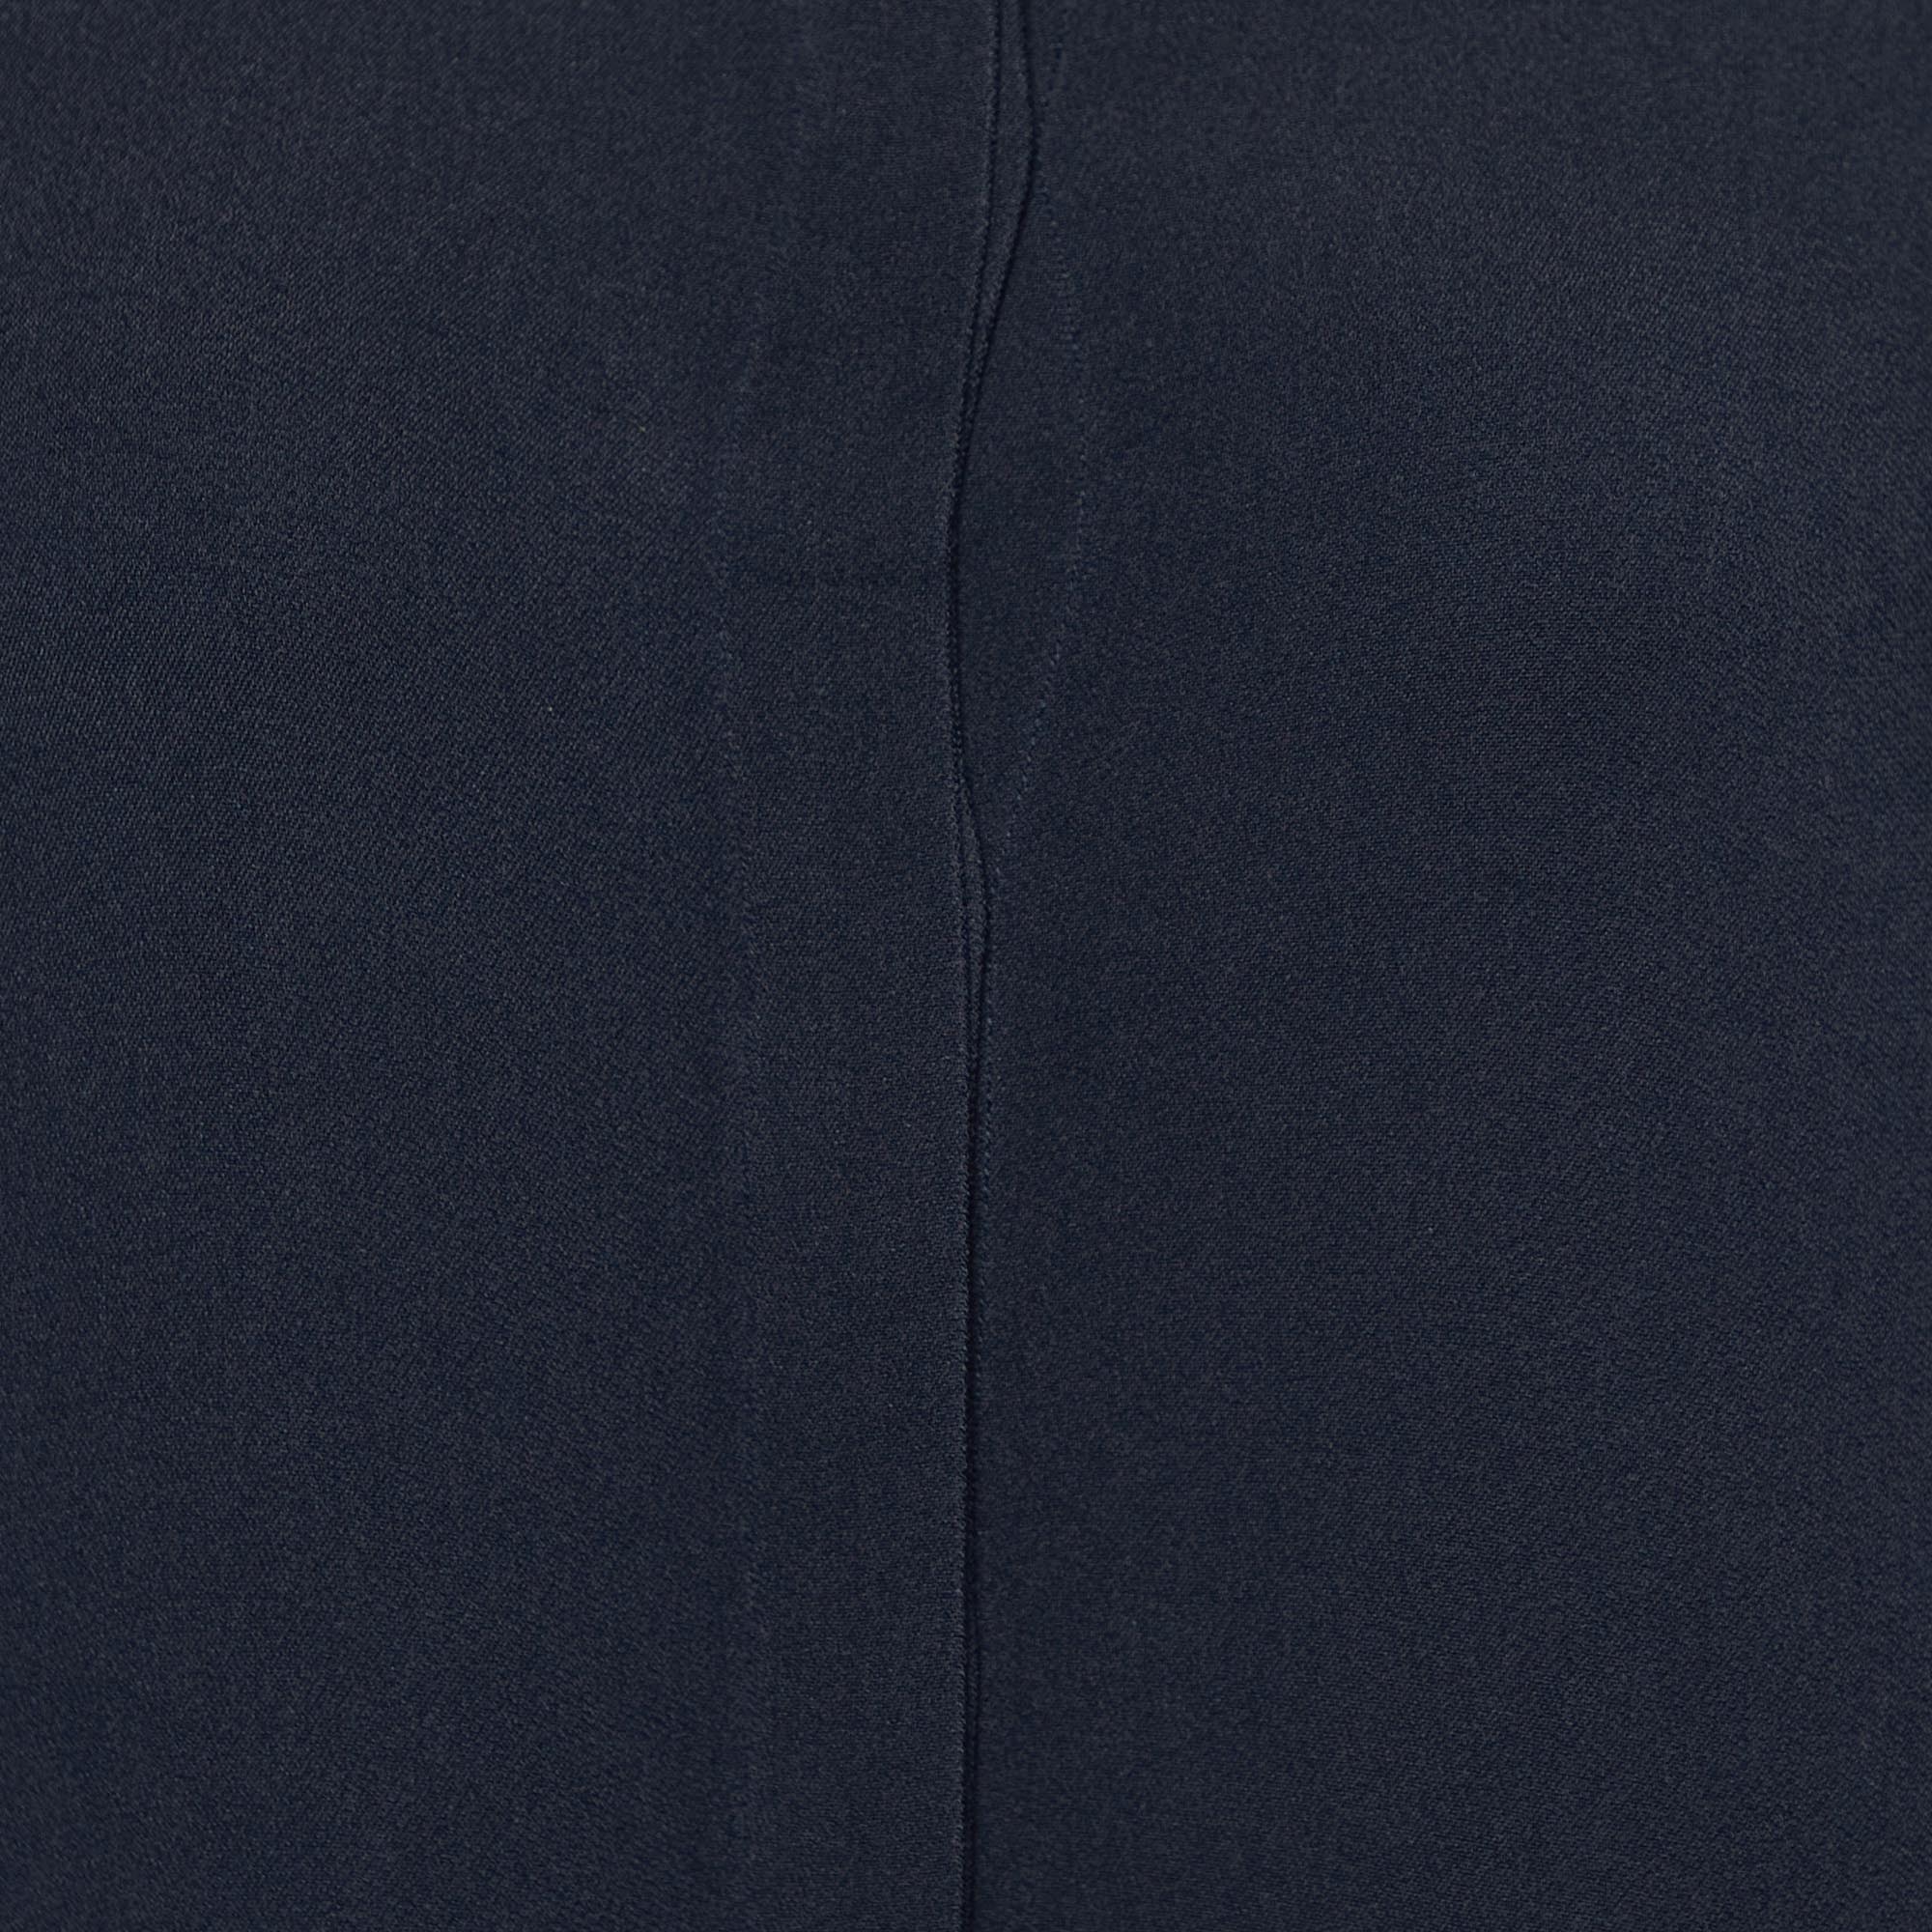 S'Max Mara Navy Blue Crepe Button Front Shirt Midi Dress M